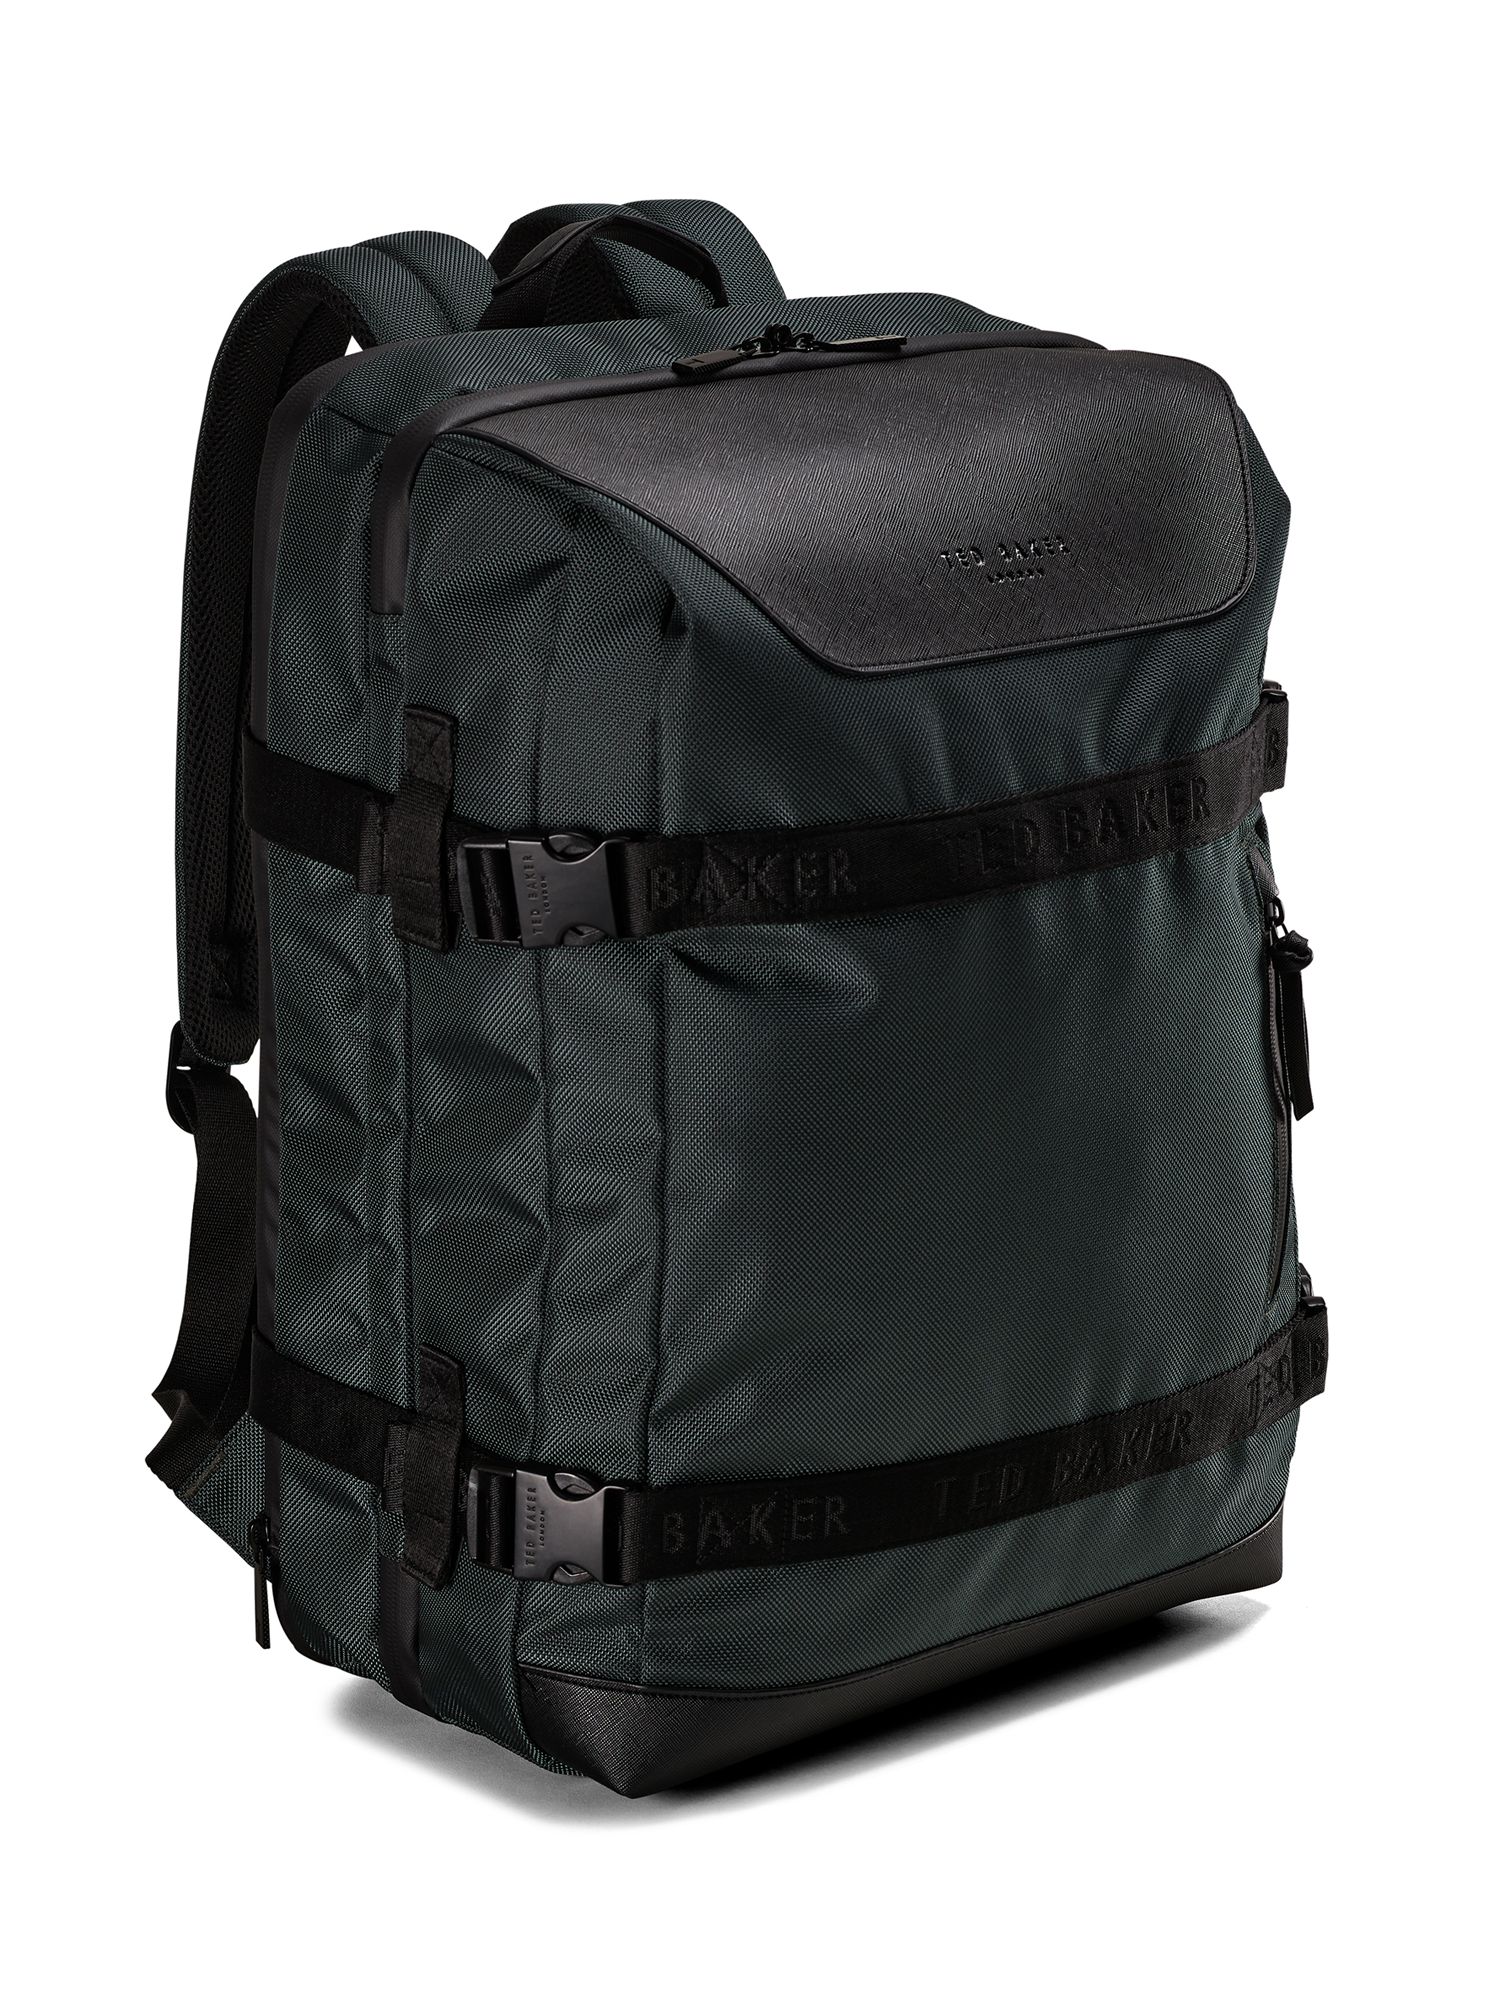 Ted Baker Nomad Backpack, 34L, Pewter Grey at John Lewis & Partners